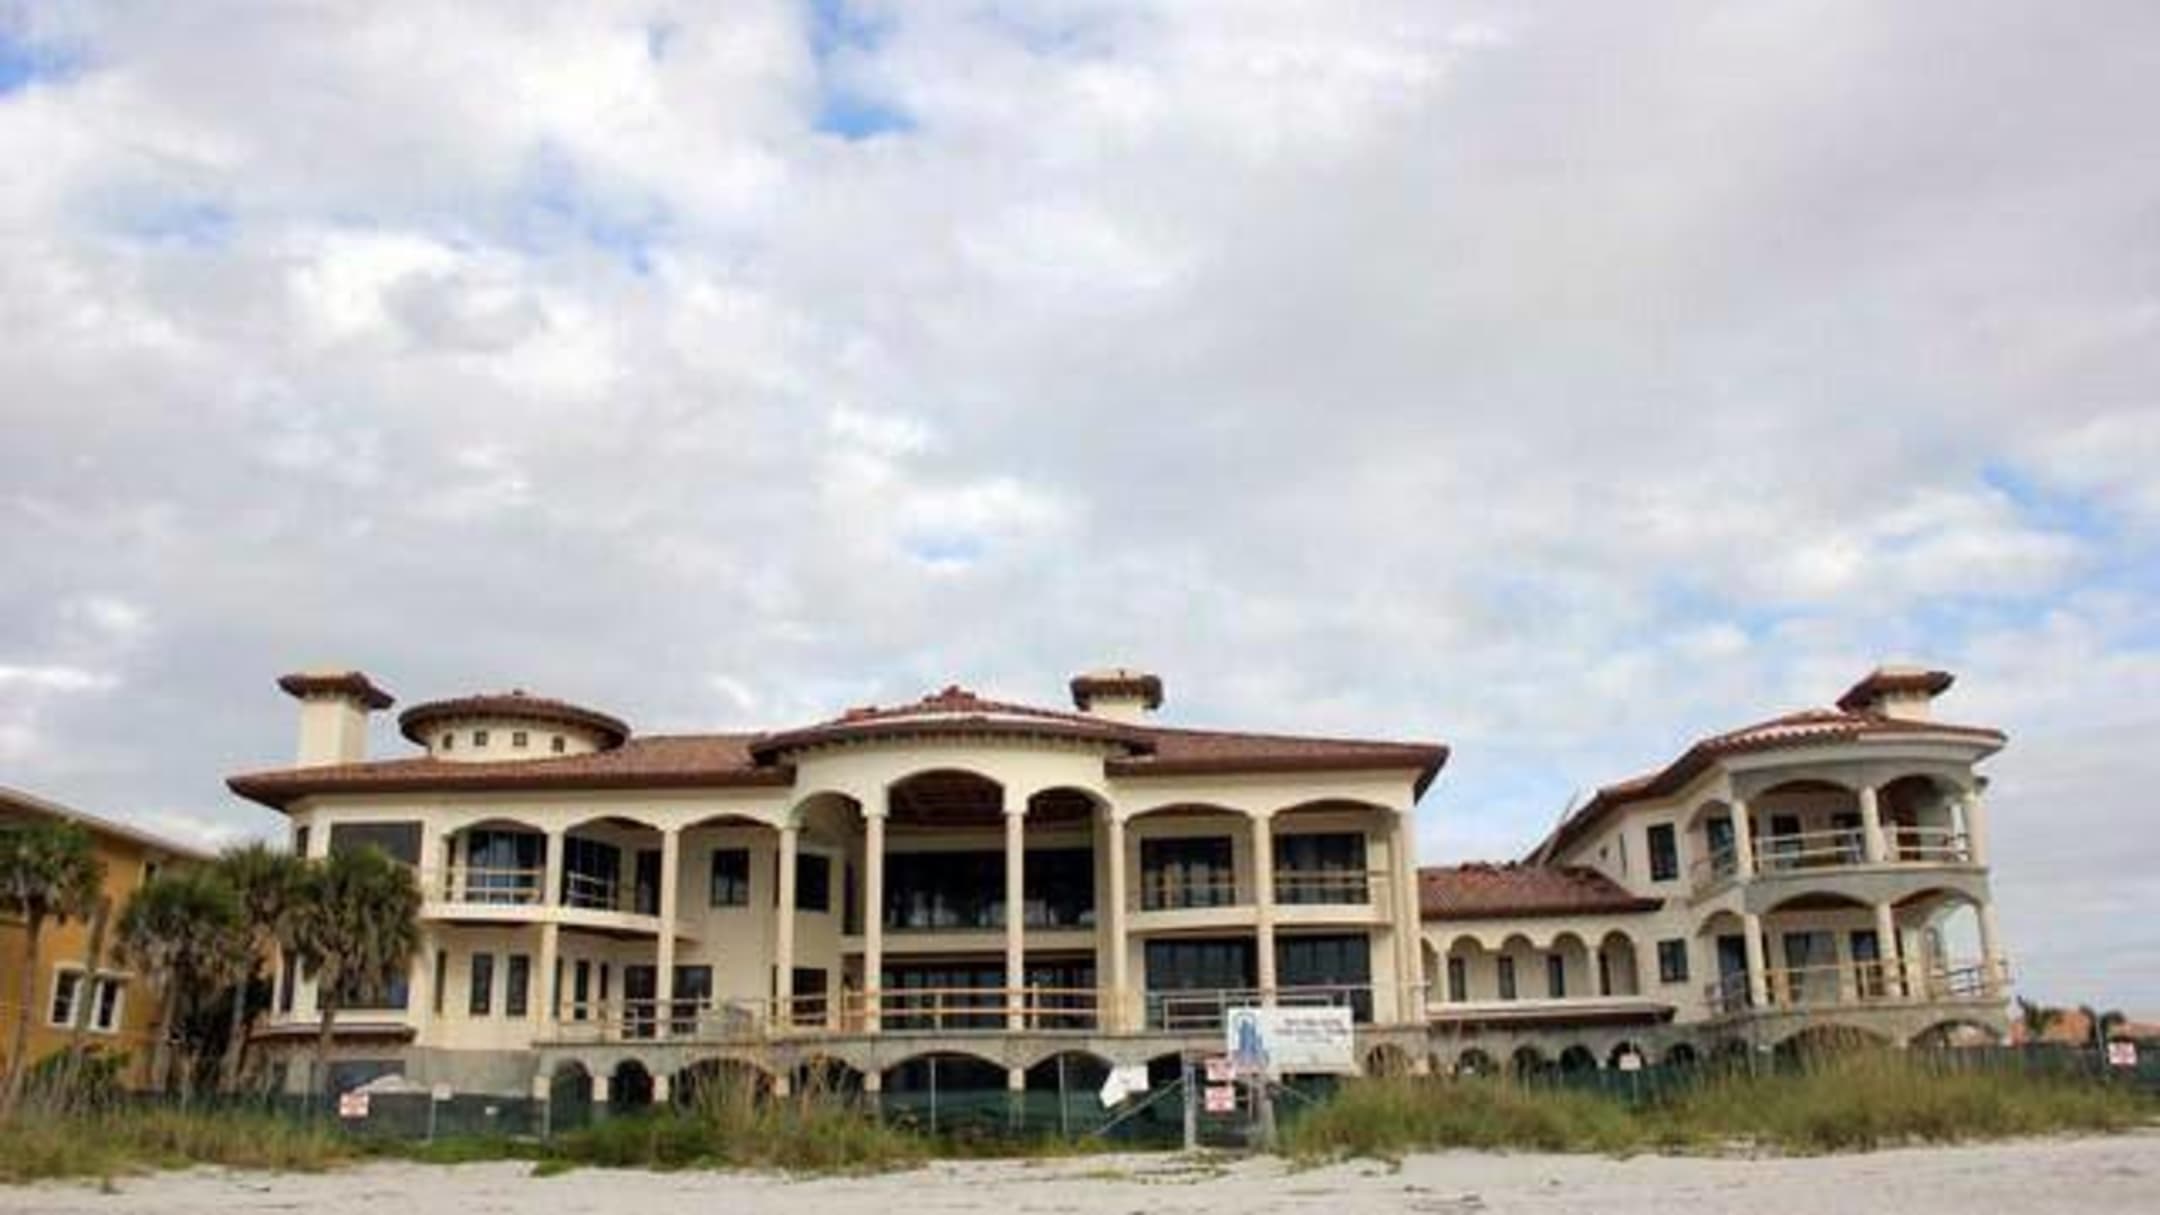 Report: Ryan Howard's mansion will have $80K in doorknobs